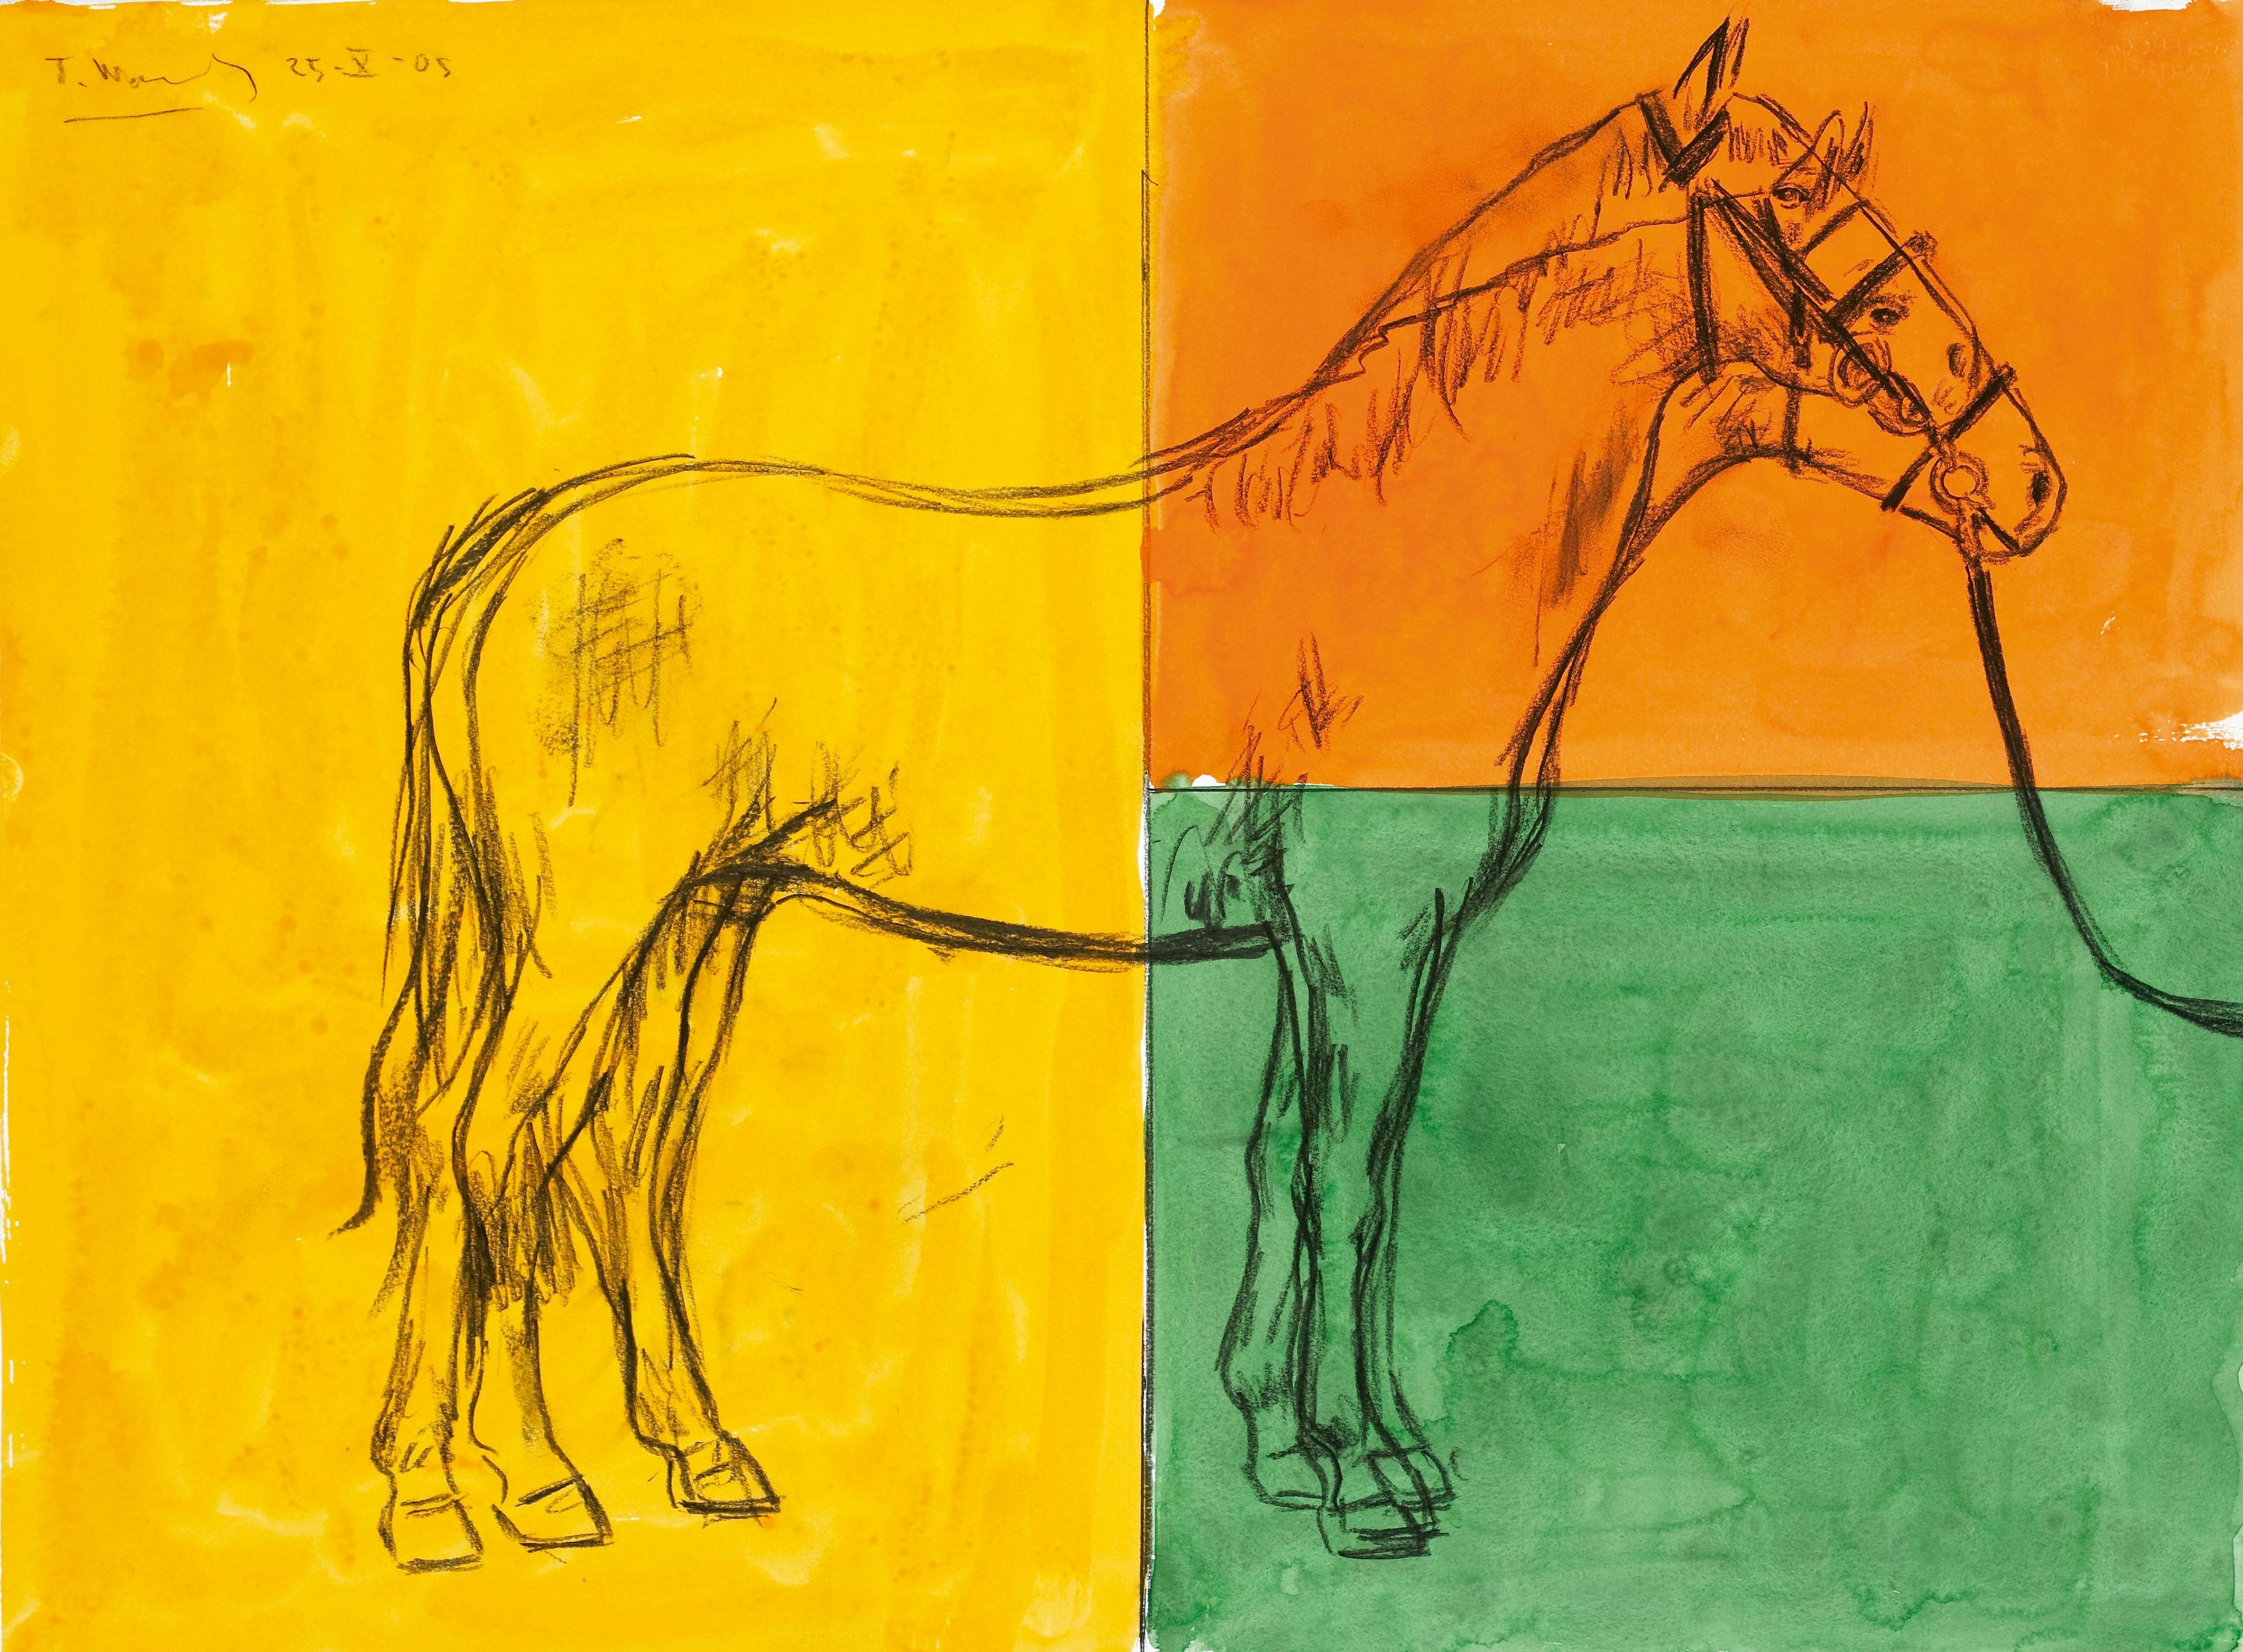 Konstverk: Troels Wörsel, Two horses, 2005